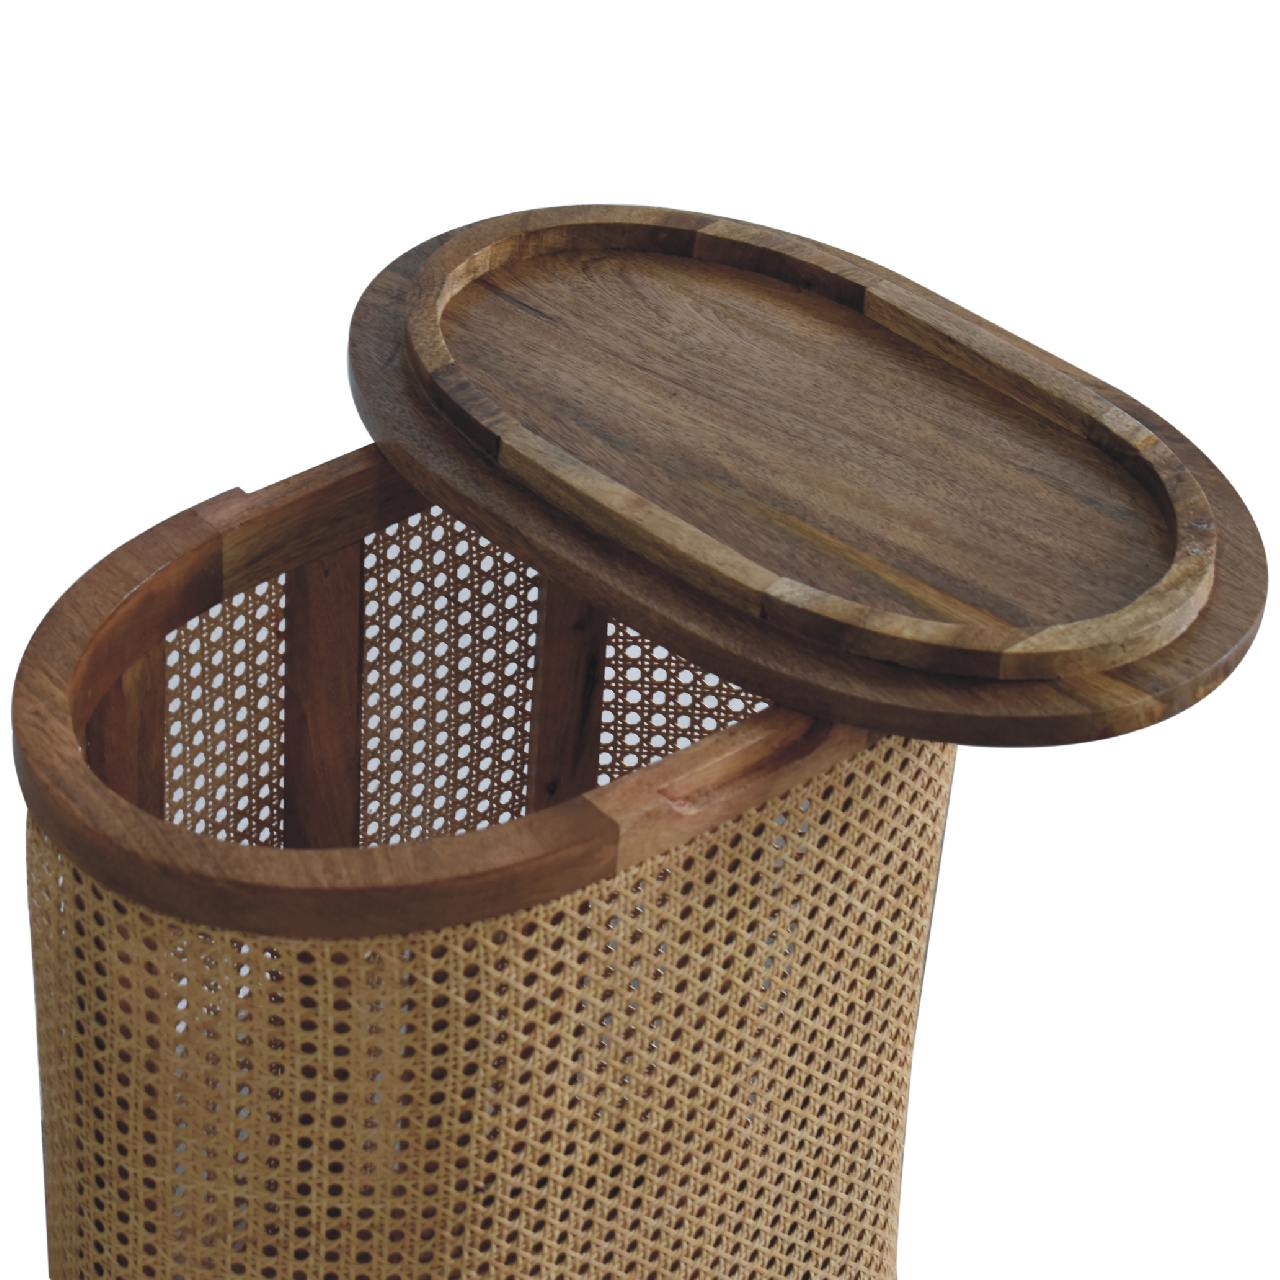 Rattan Lidded linen or washing basket